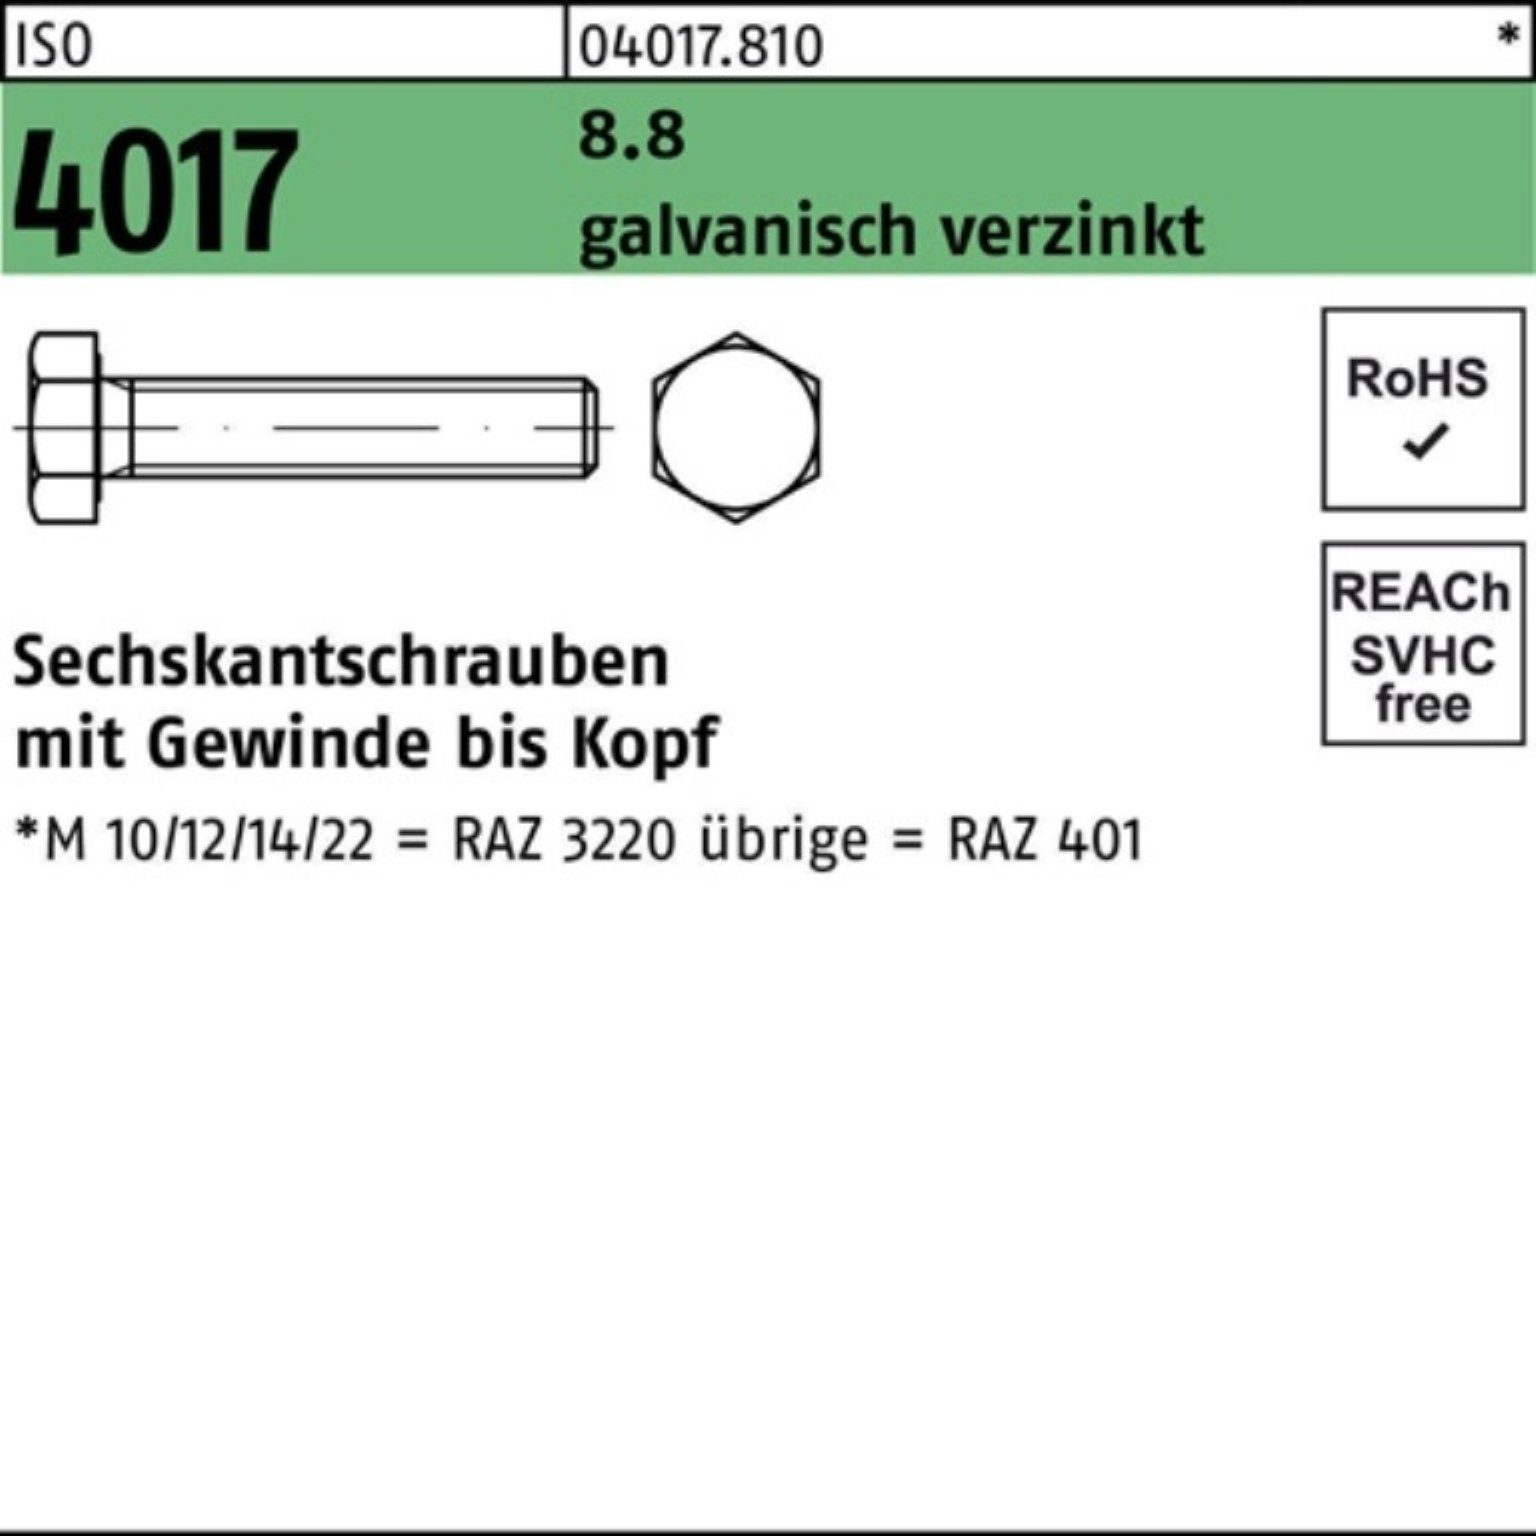 Bufab Sechskantschraube 200er galv.verz. 8.8 Pack 200 VG Sechskantschraube M10x 4017 ISO St 14